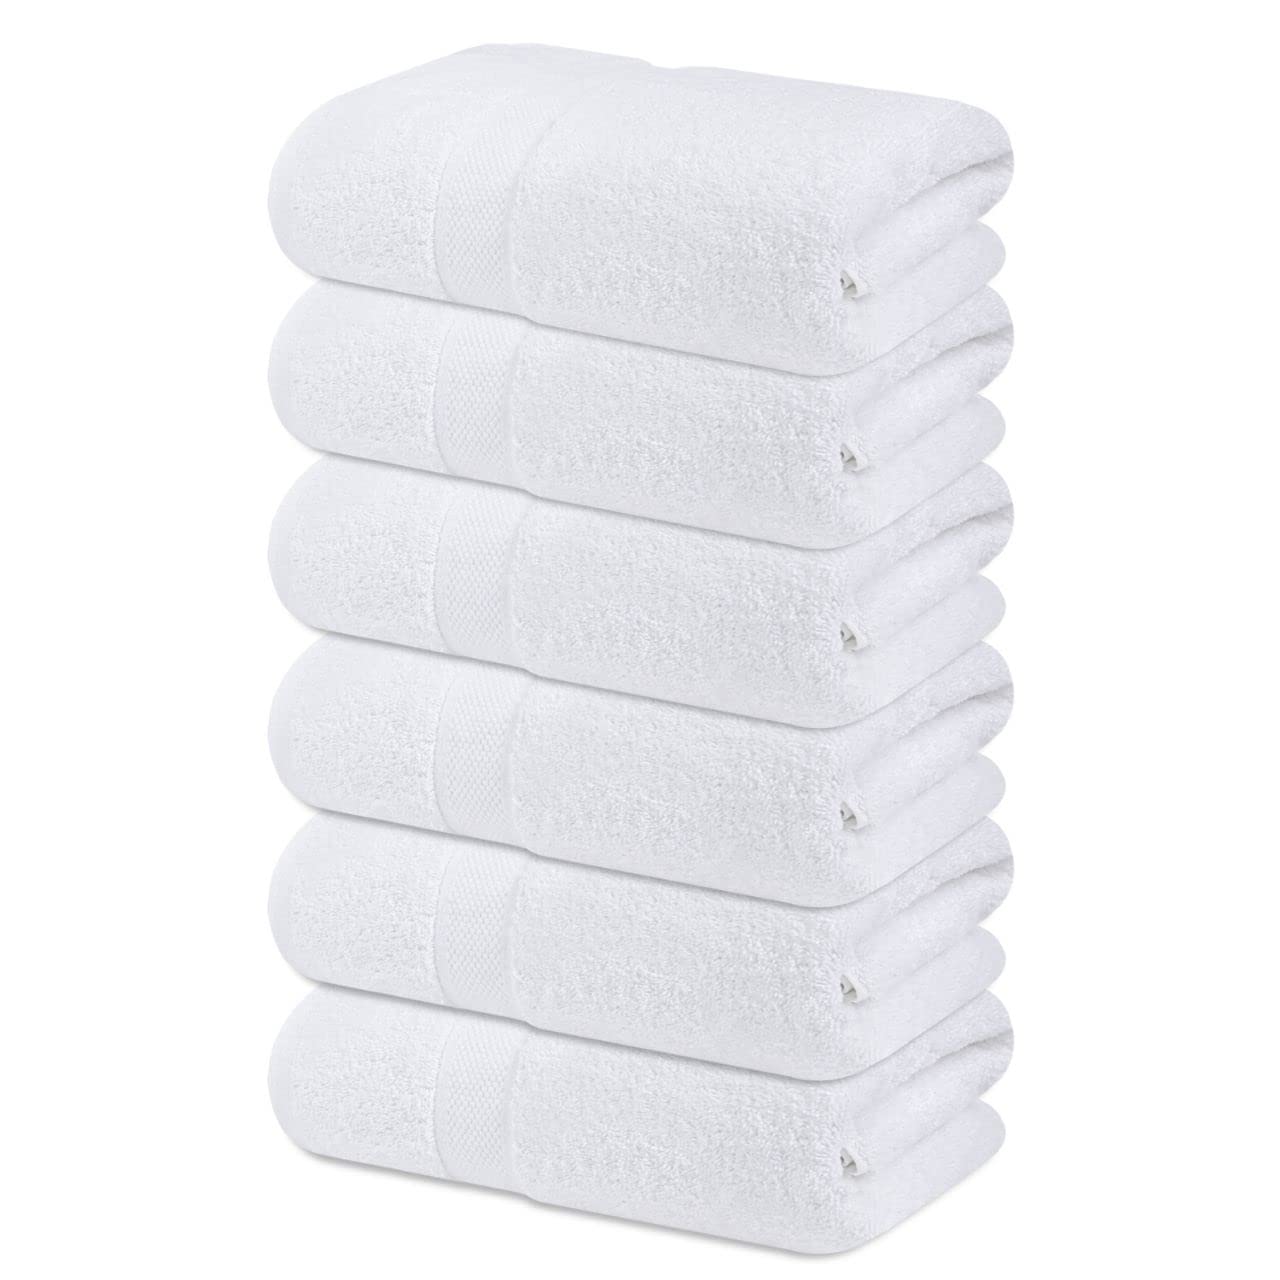 Infinitee Xclusives Premium Kitchen Towels – 6 Pack, 100% Cotton